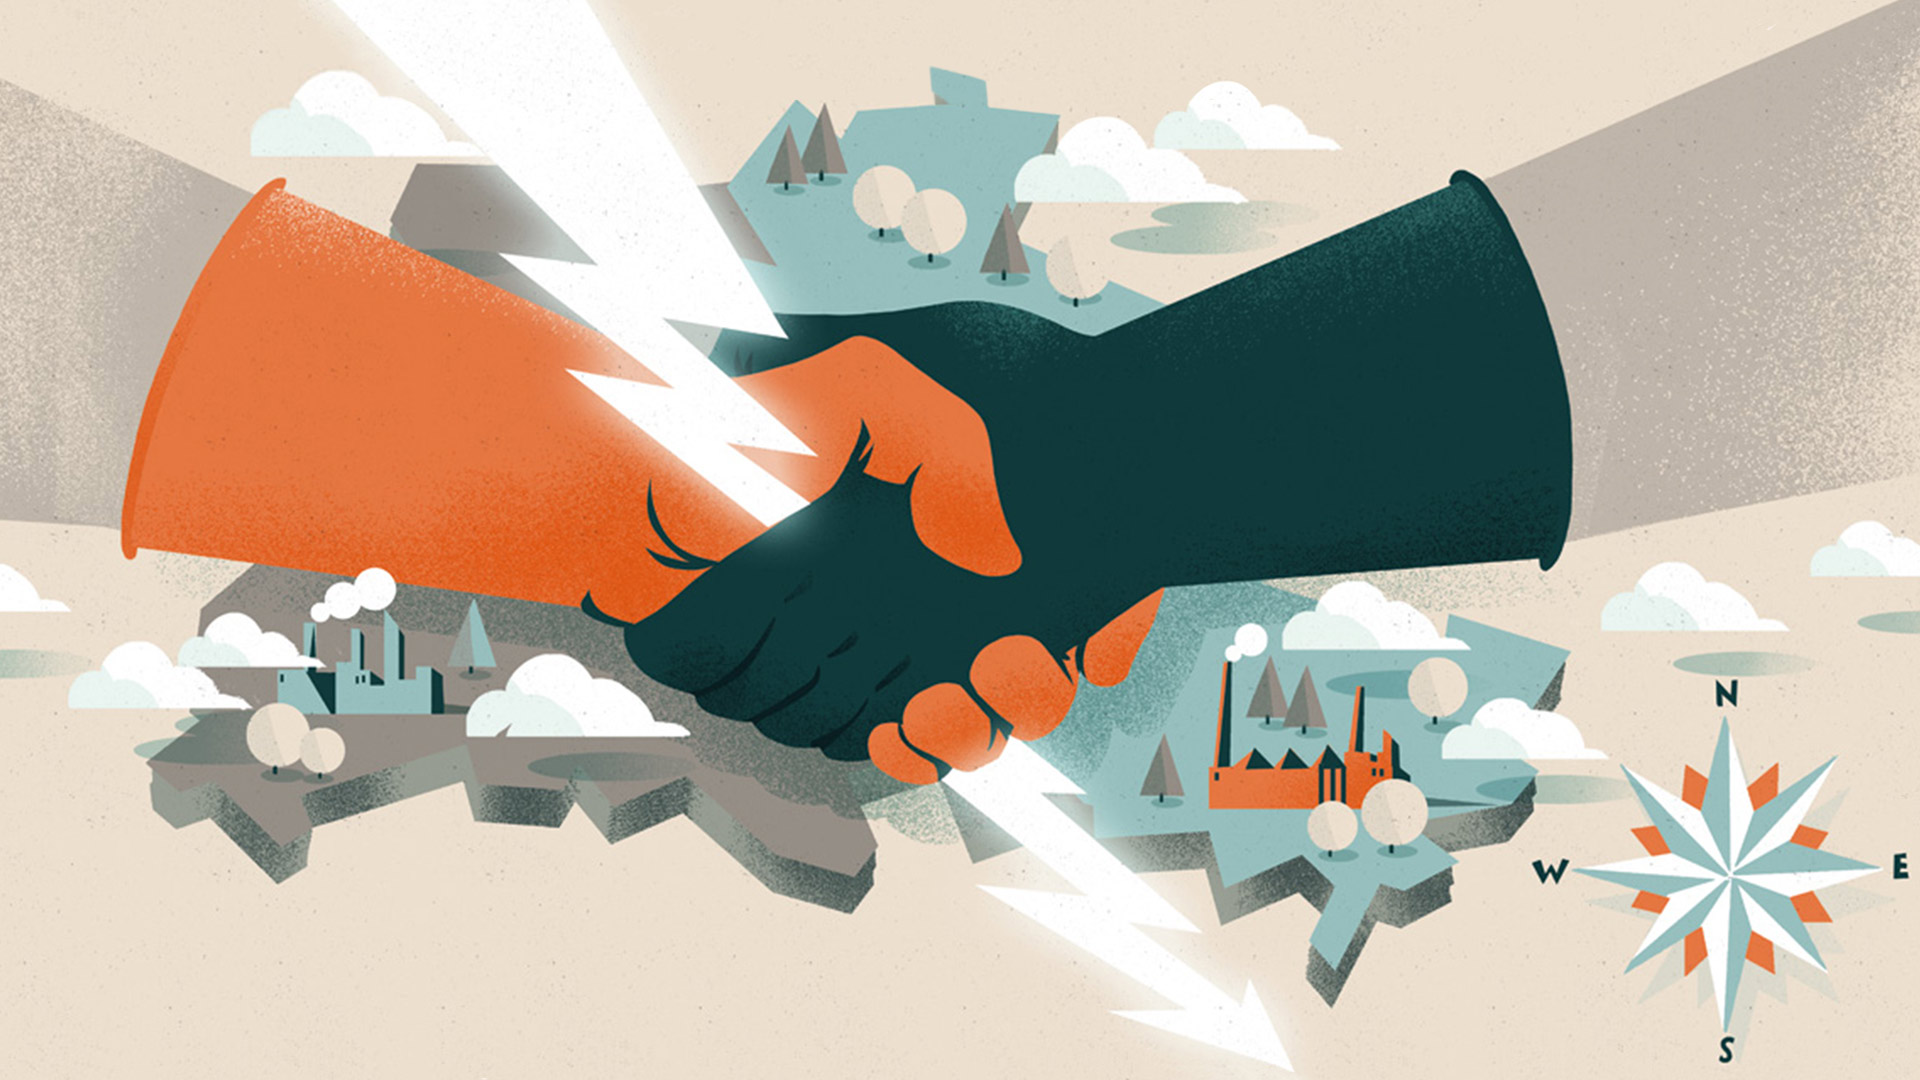 Illustration of the handshake dividing Berlin